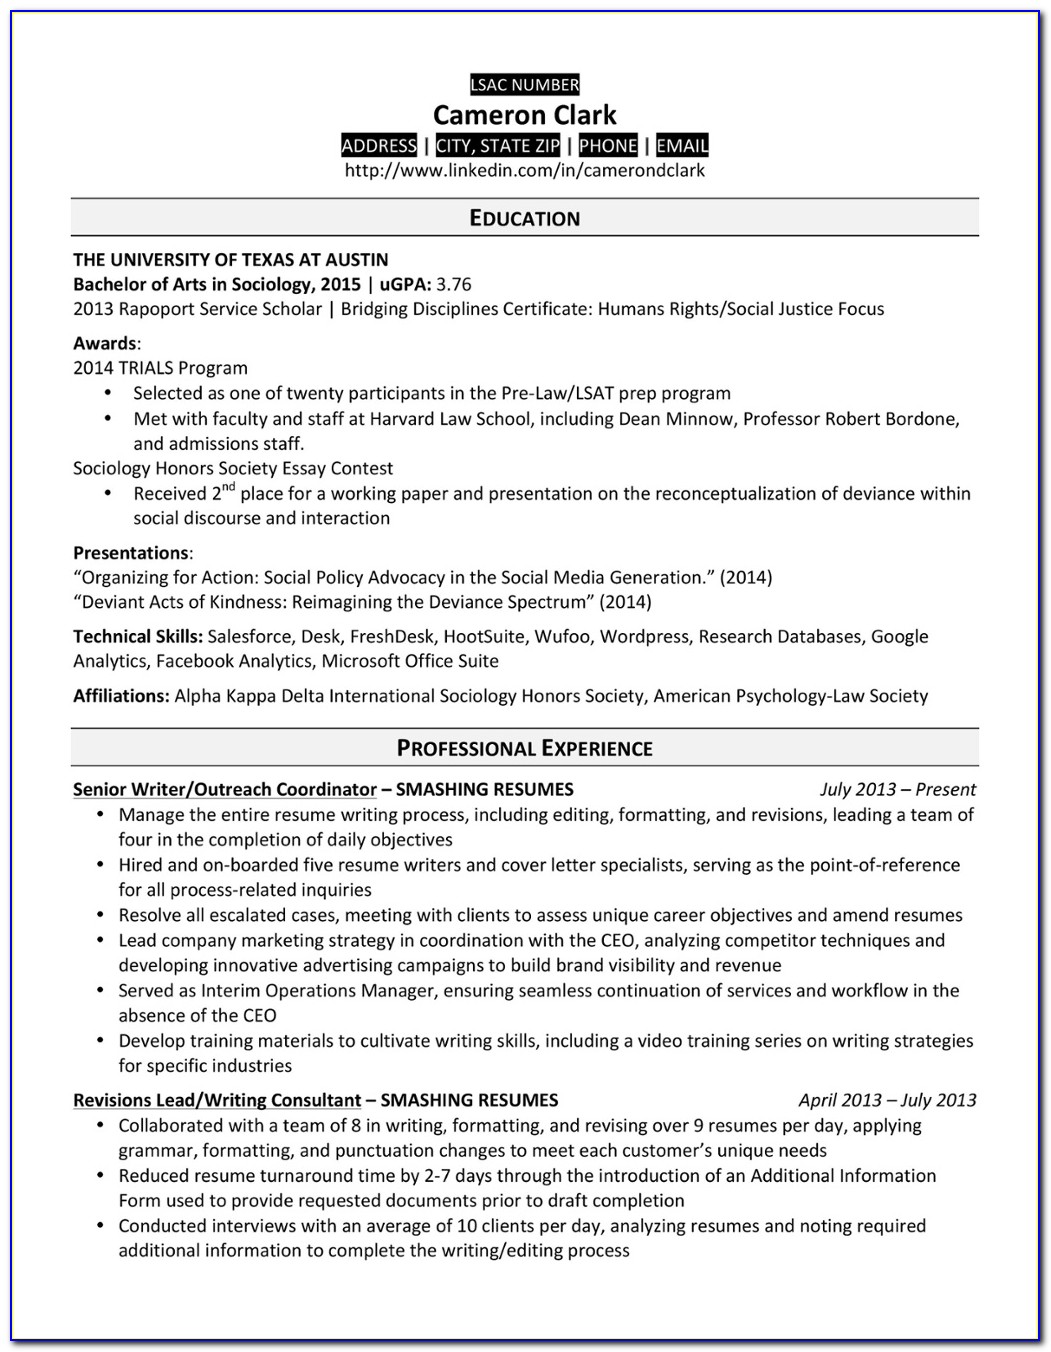 Graduate School Application Resume Examples